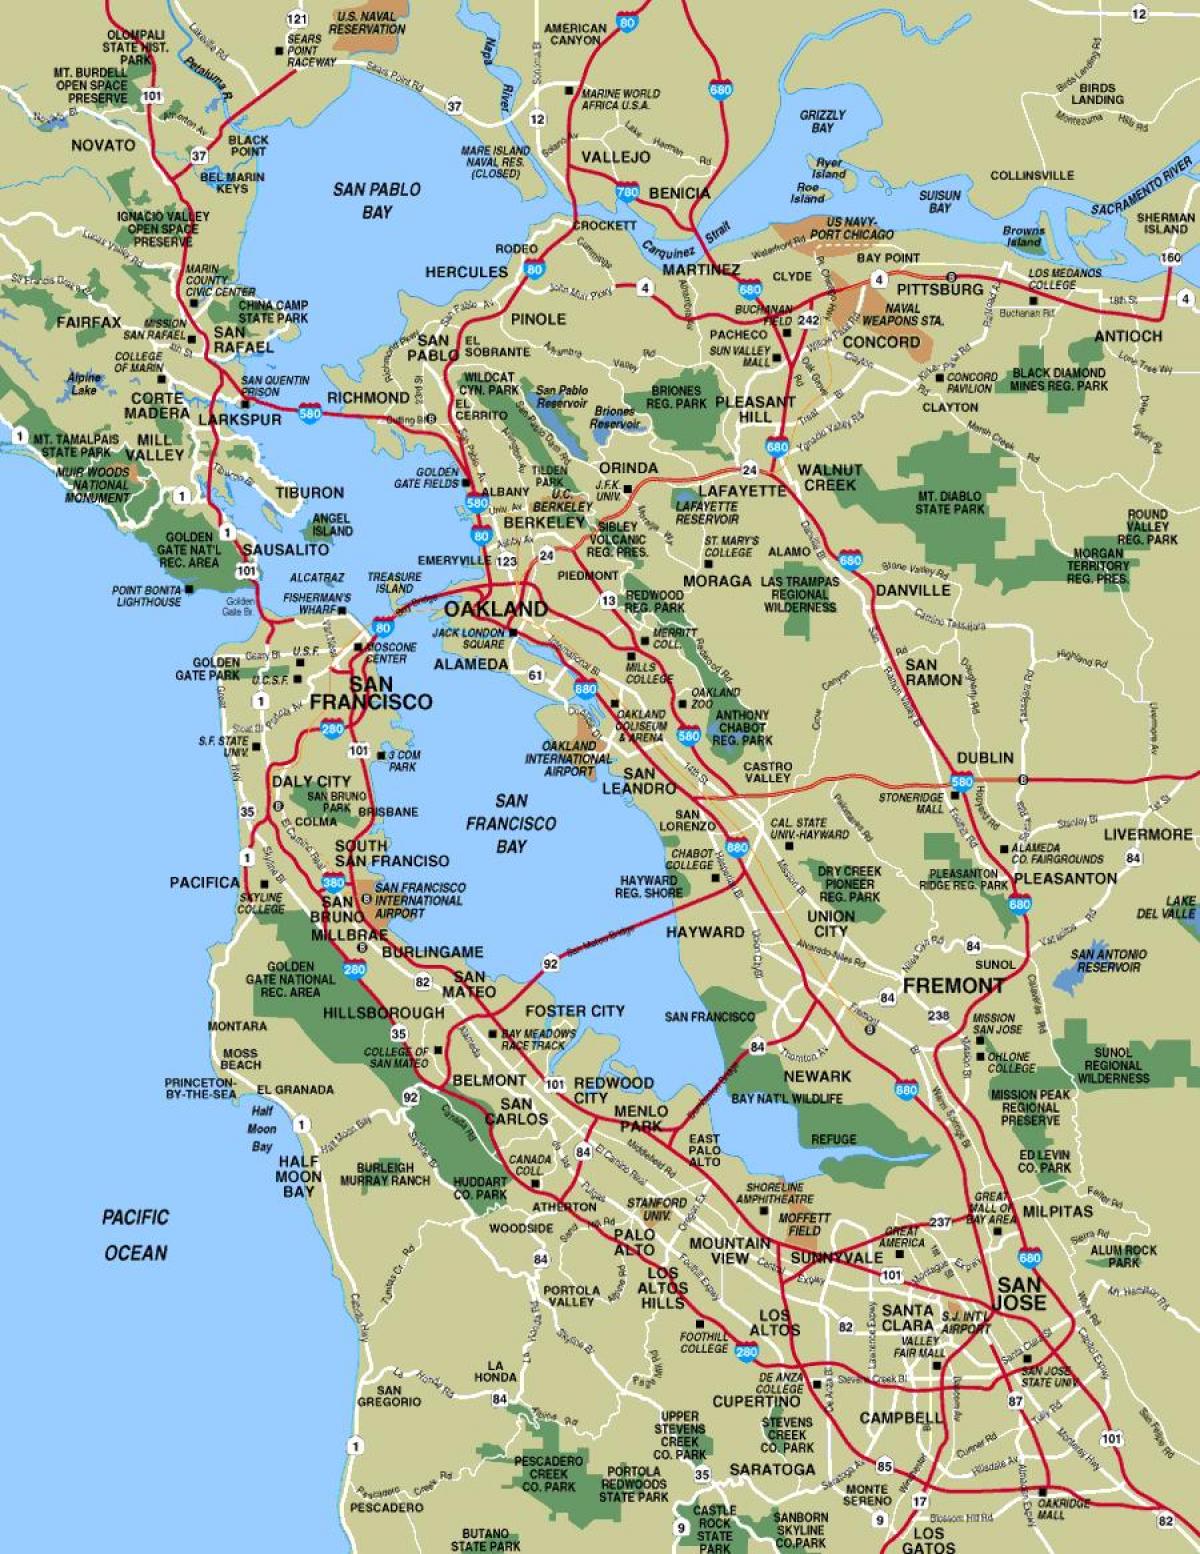 सैन फ्रांसिस्को यात्रा के नक्शे